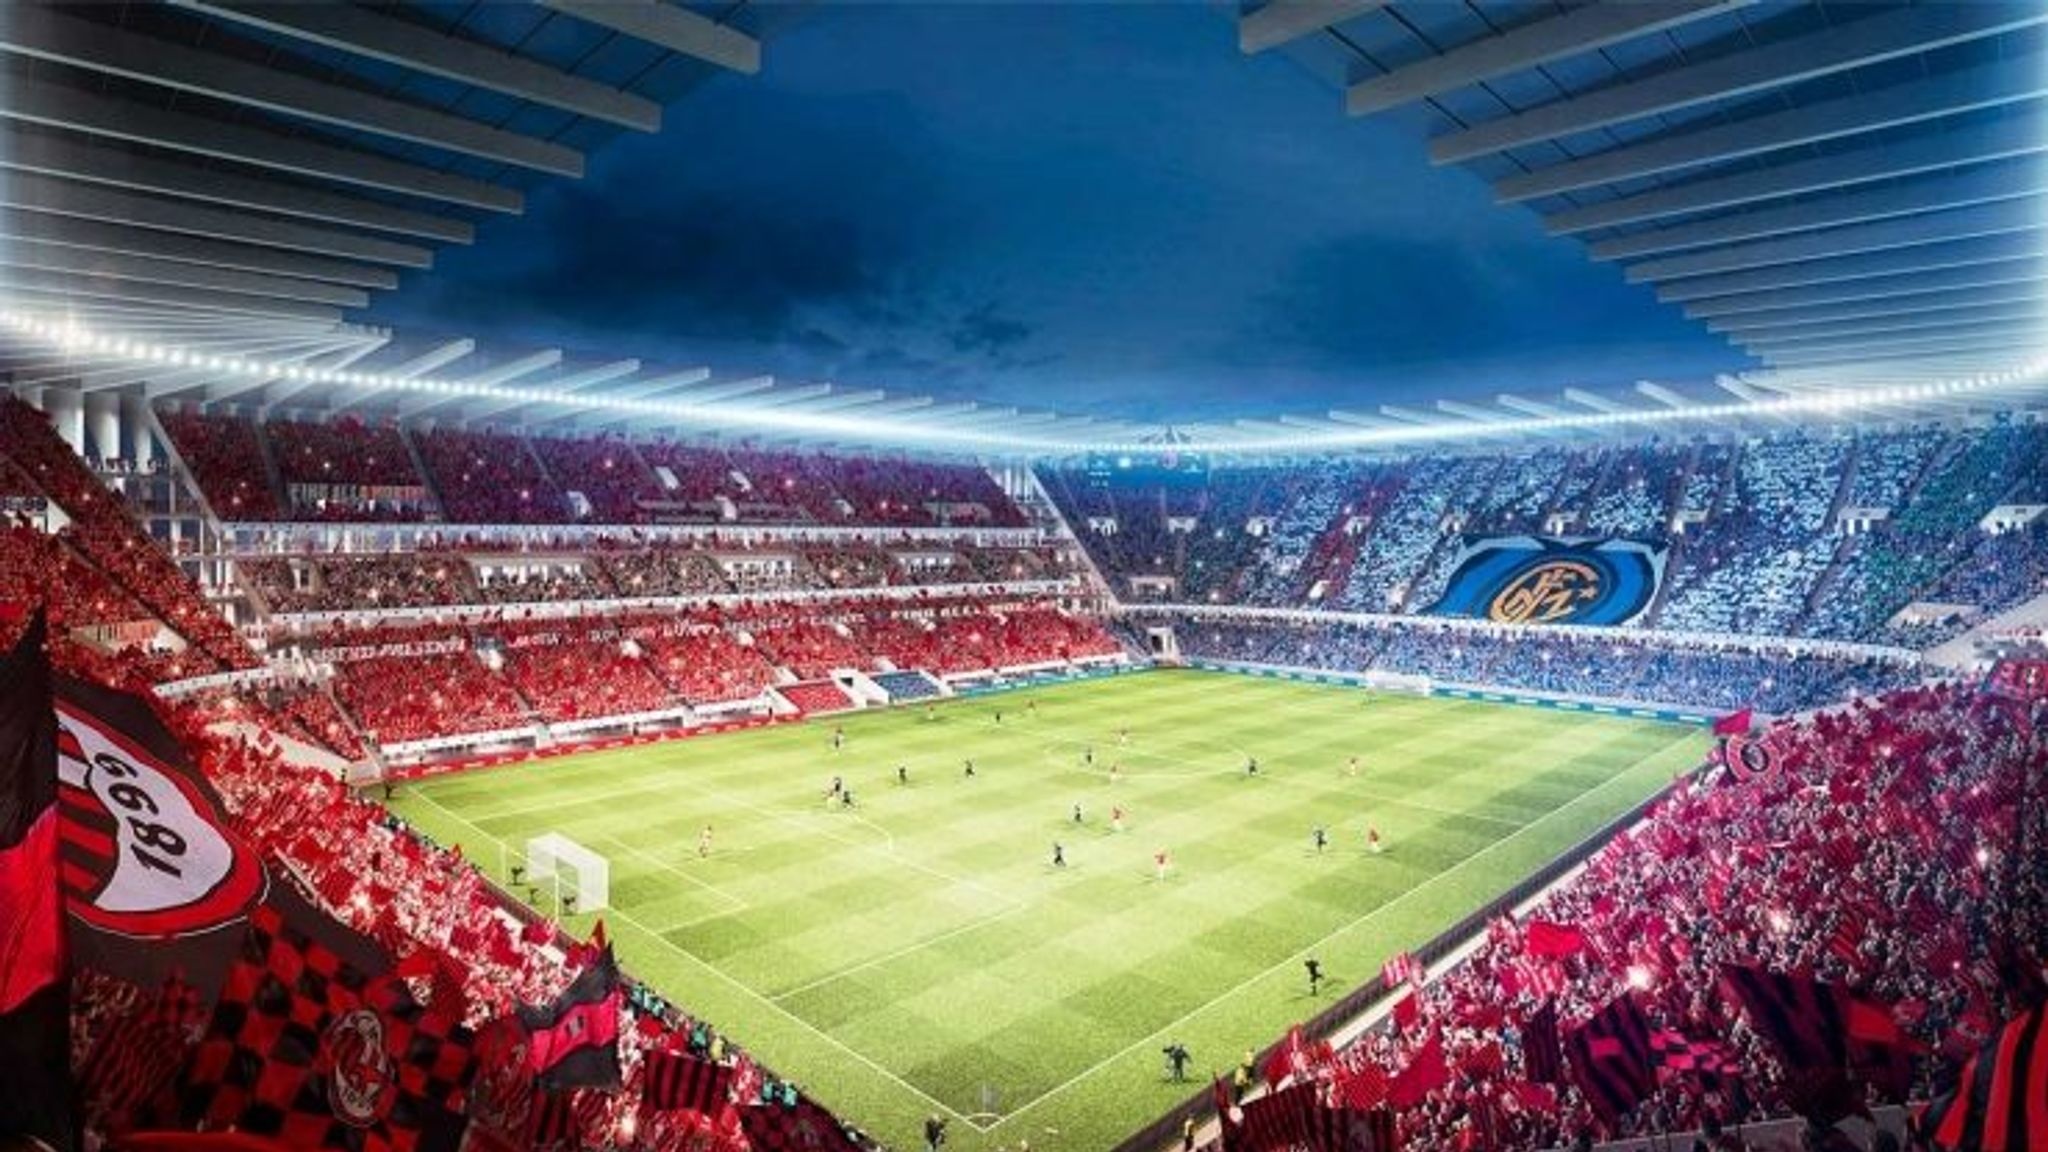 San Siro stadium, Wallpapers and backgrounds, Football venue, Historic landmark, 2050x1160 HD Desktop